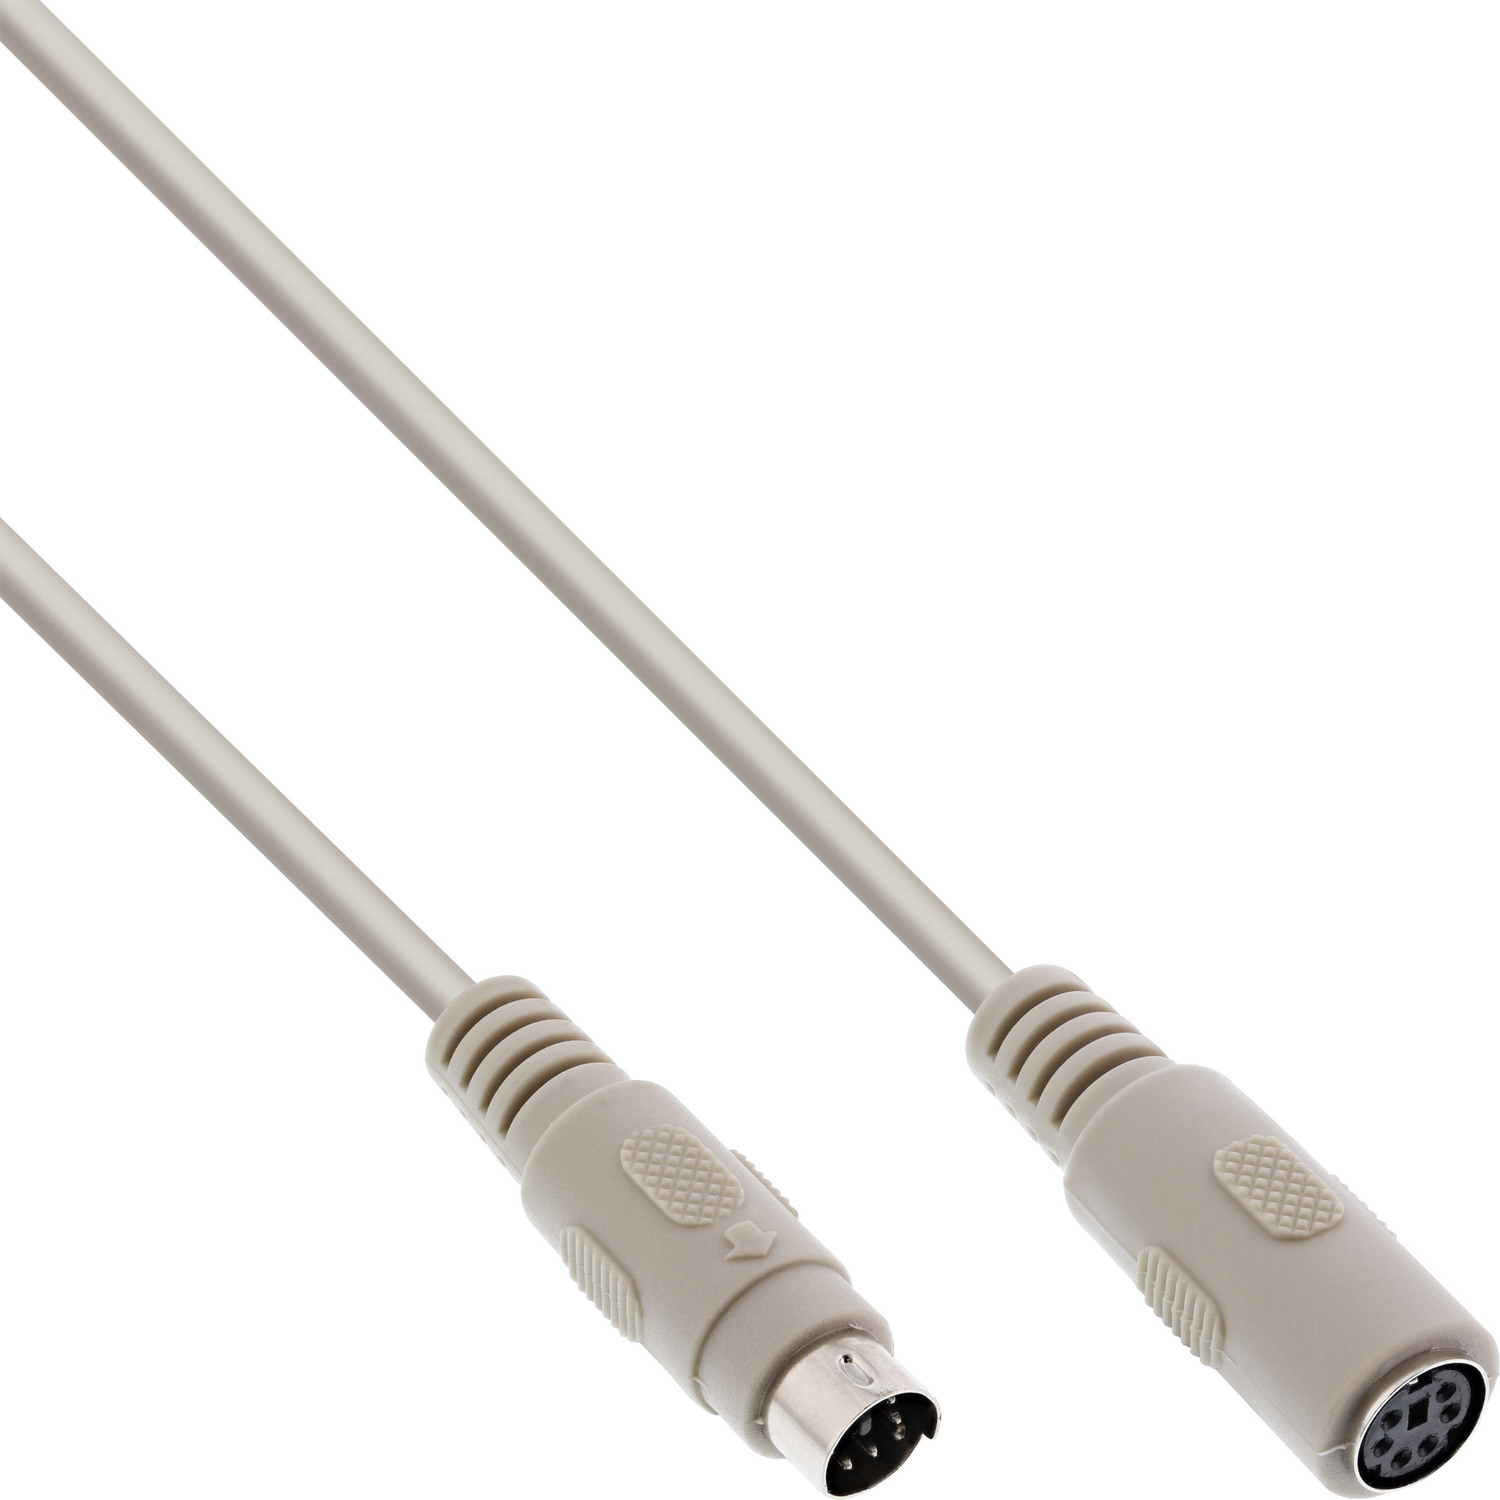 10 / Kabel 10m PS/2, InLine® m INLINE PS/2 Stecker Verlängerung, Buchse, Verlängerung,